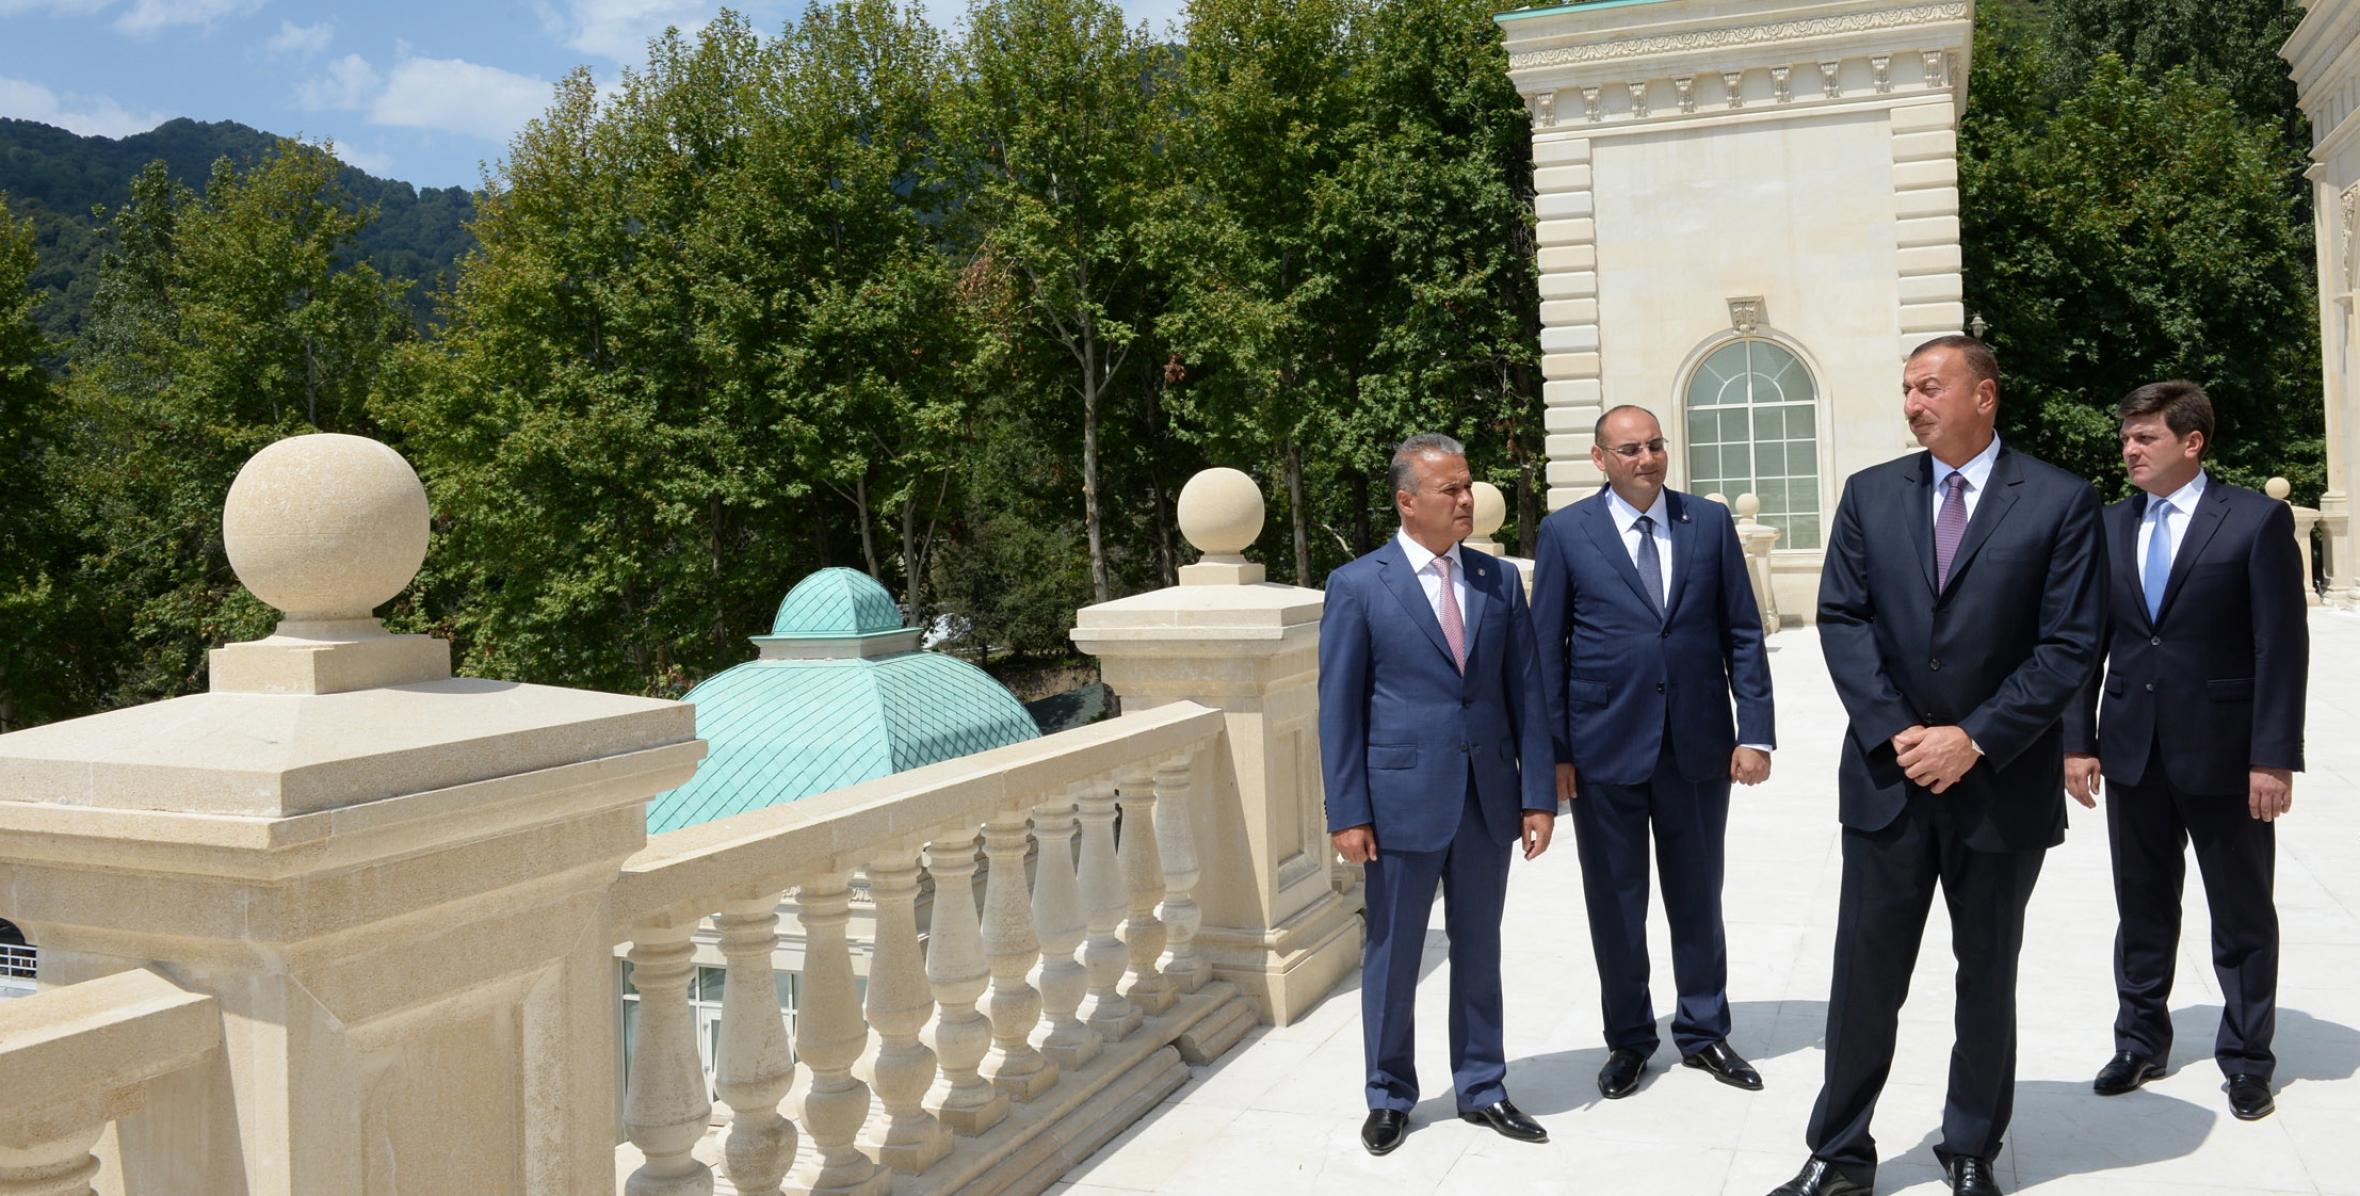 Ilham Aliyev attended the opening of the Heydar Aliyev Congress Center in Gabala